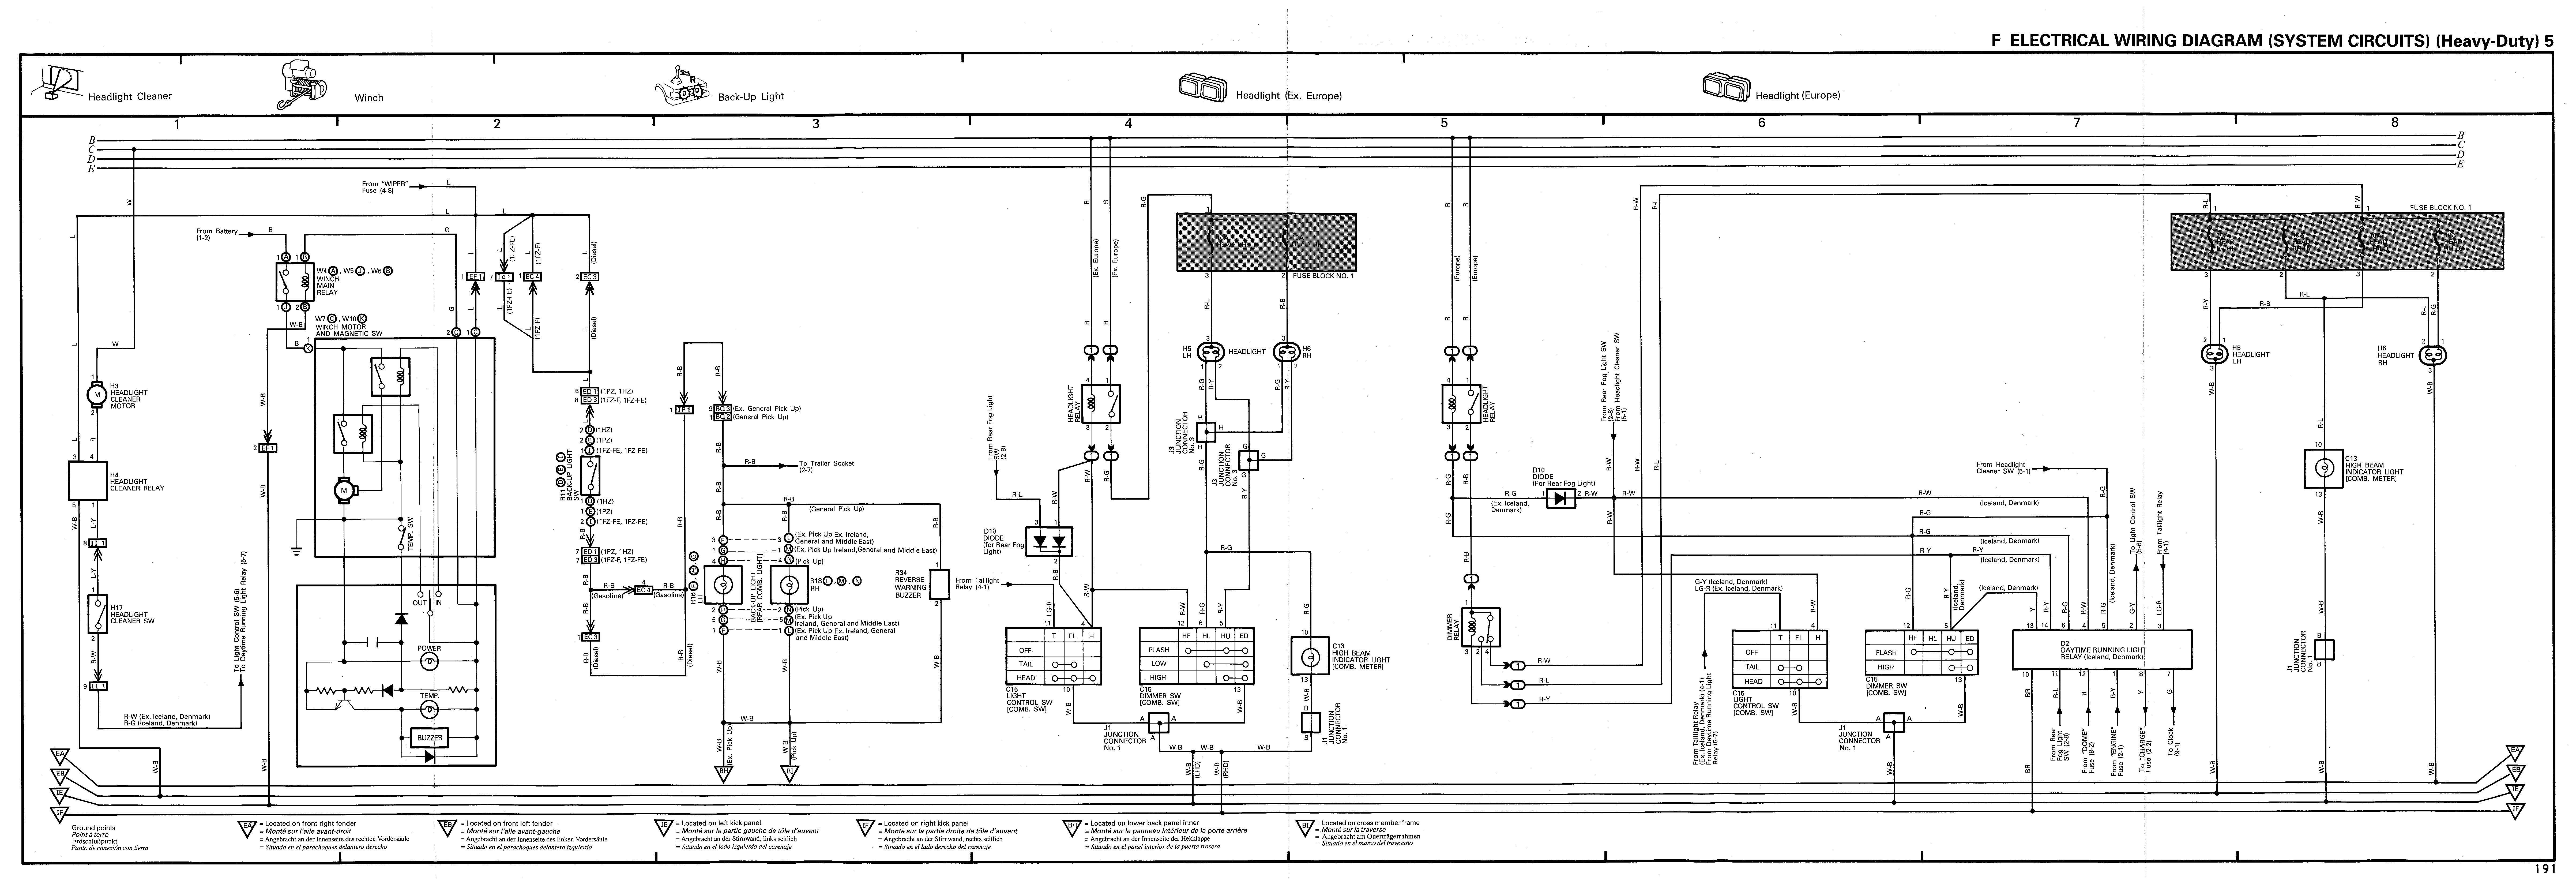 98 Toyotum Electrical Wiring Diagram - Wiring Diagram Networks